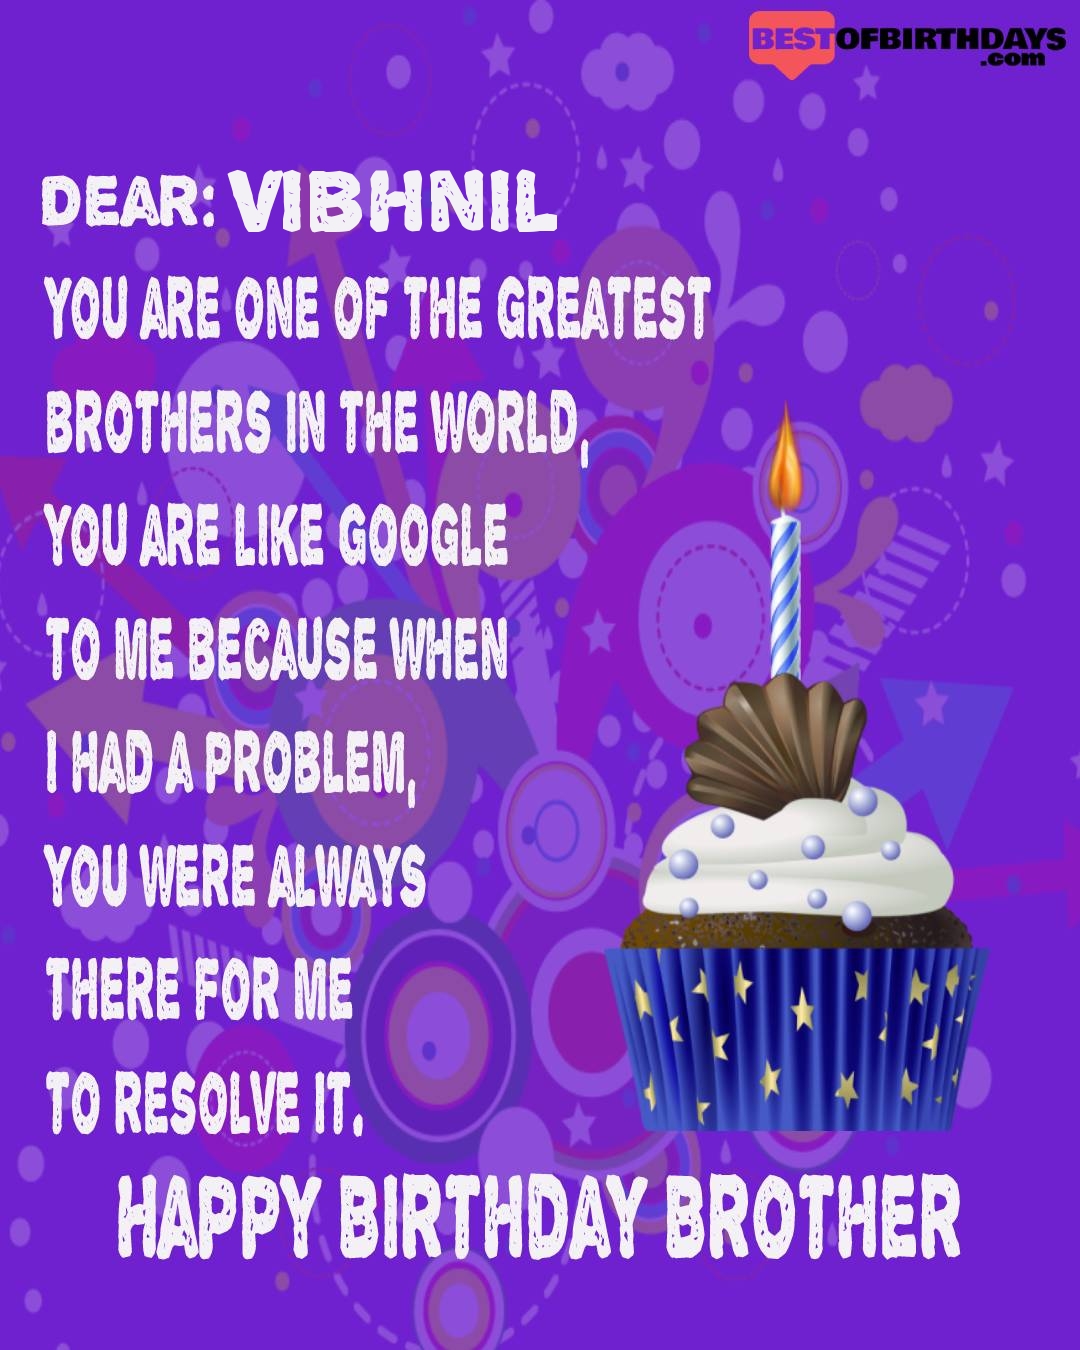 Happy birthday vibhnil bhai brother bro